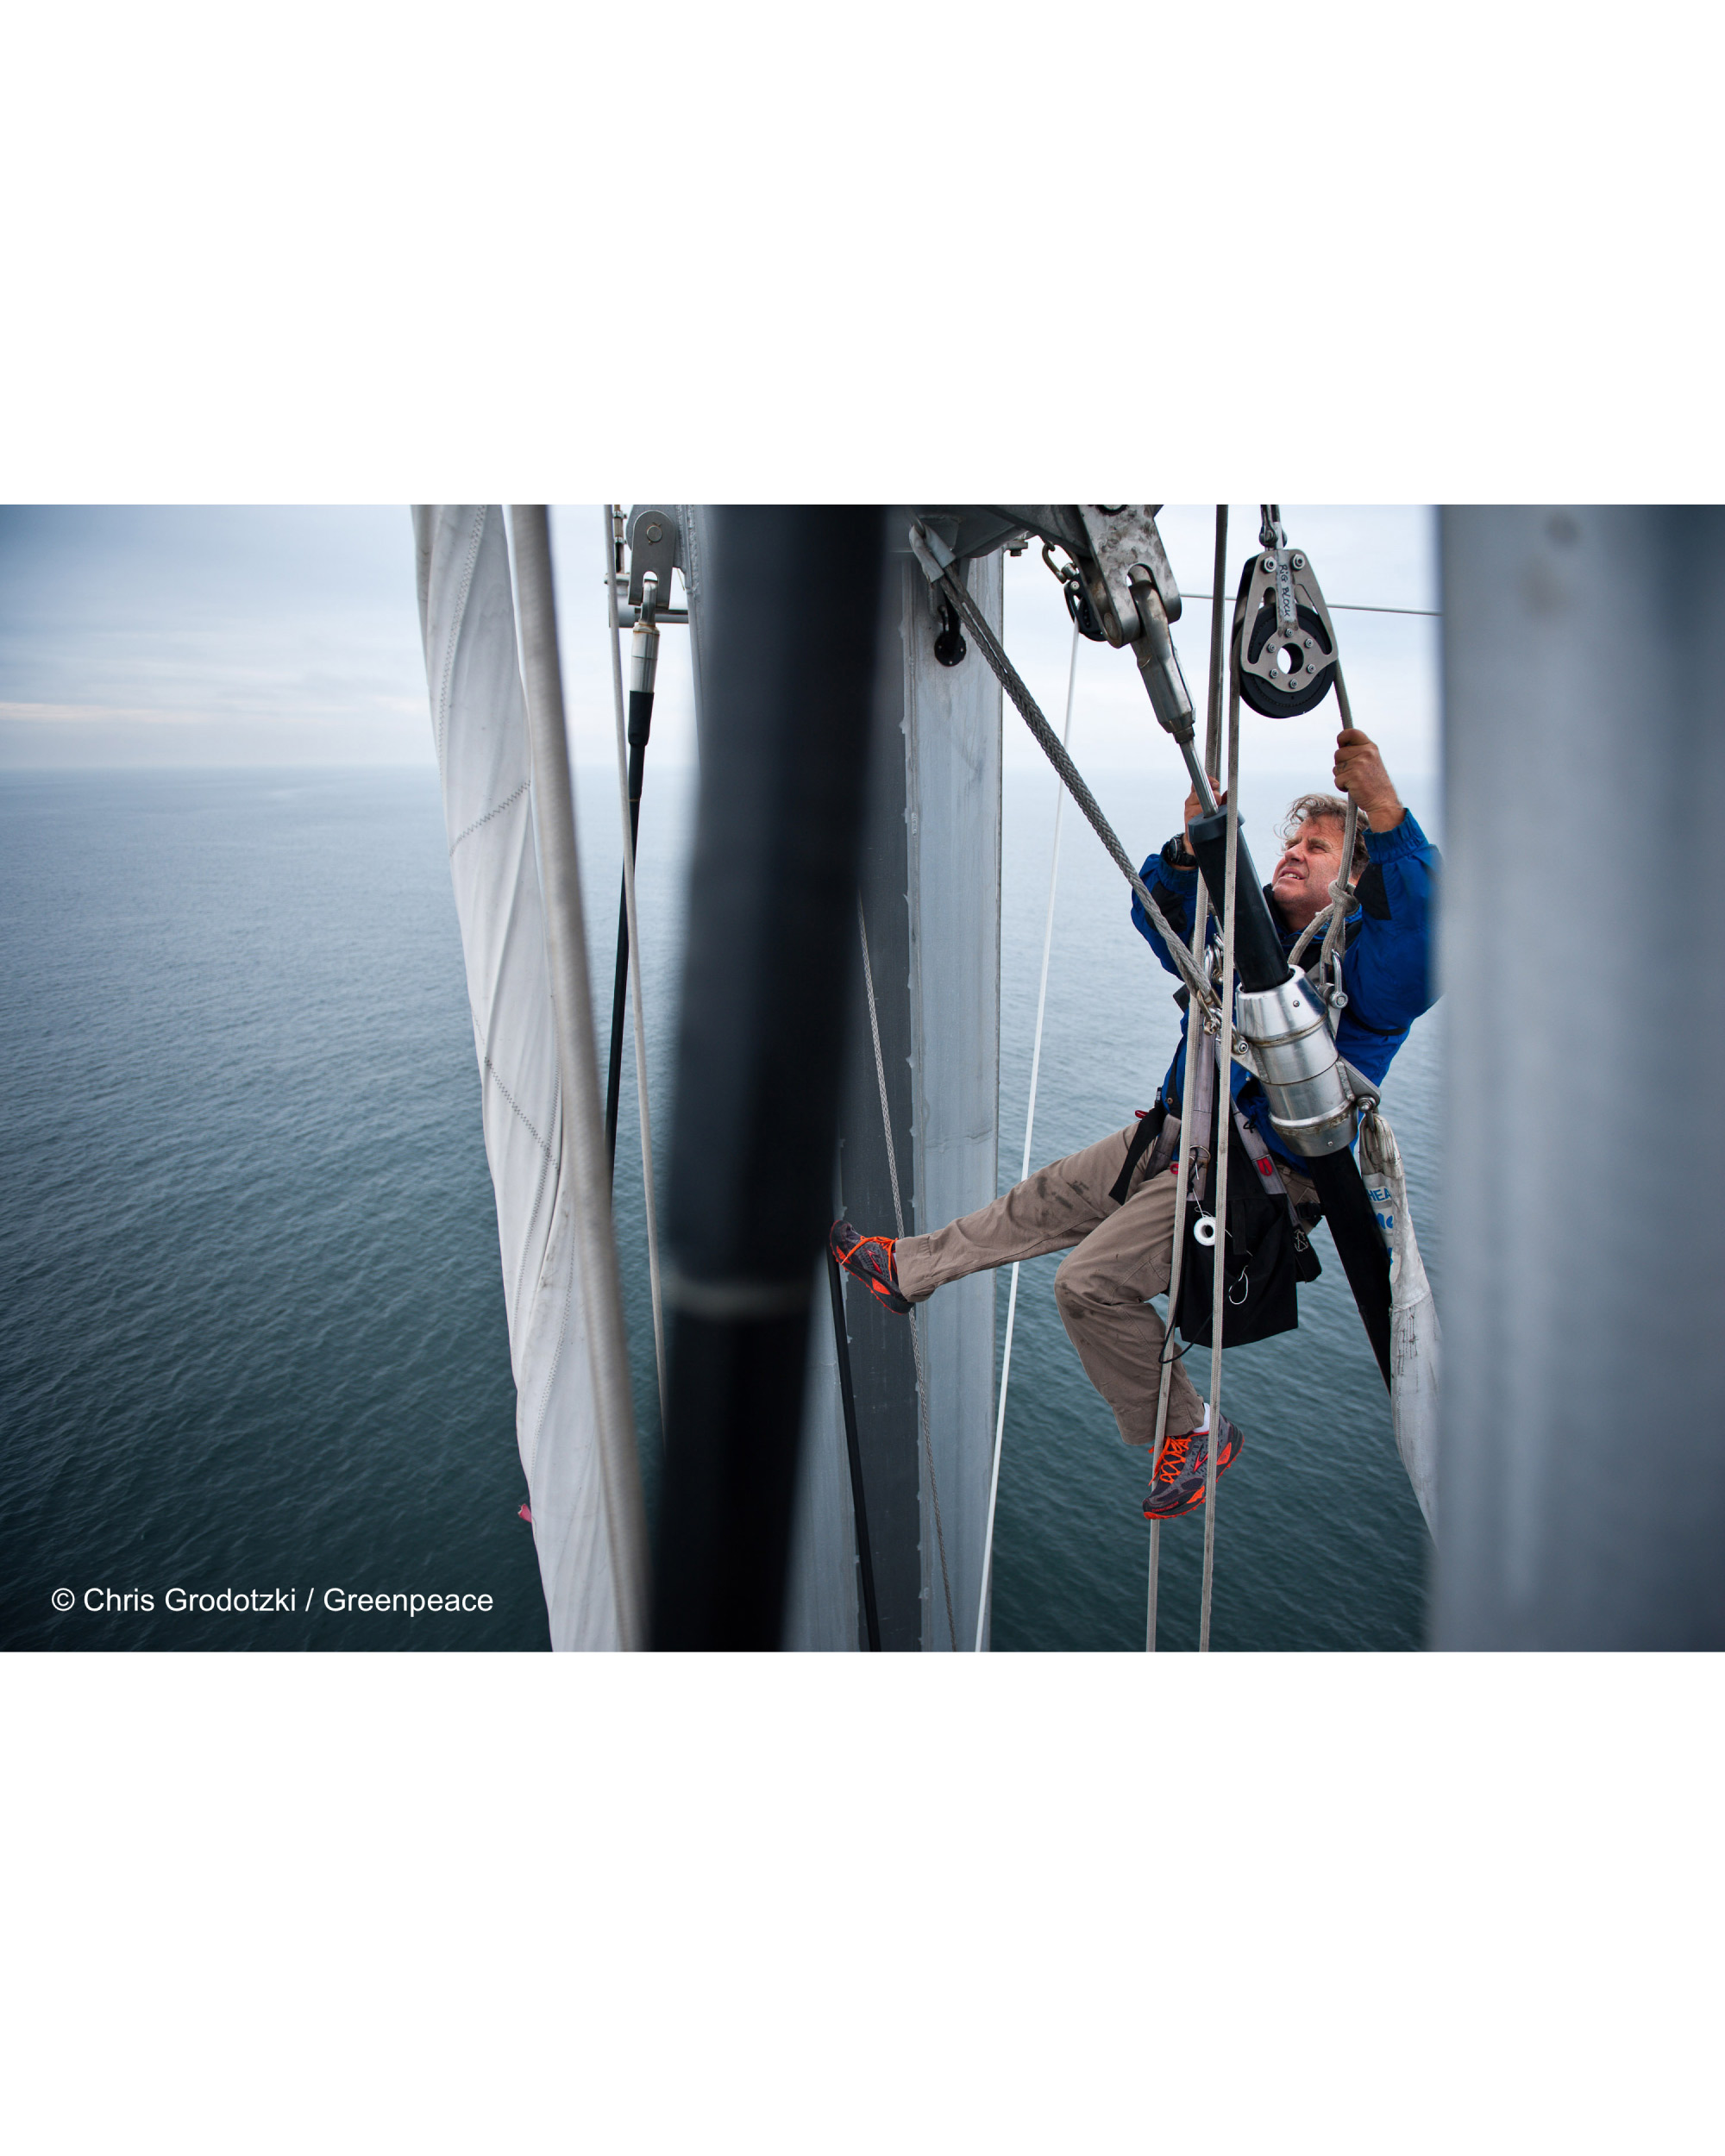 At sea on the Rainbow Warrior III. Image courtesy of Greenpeace.